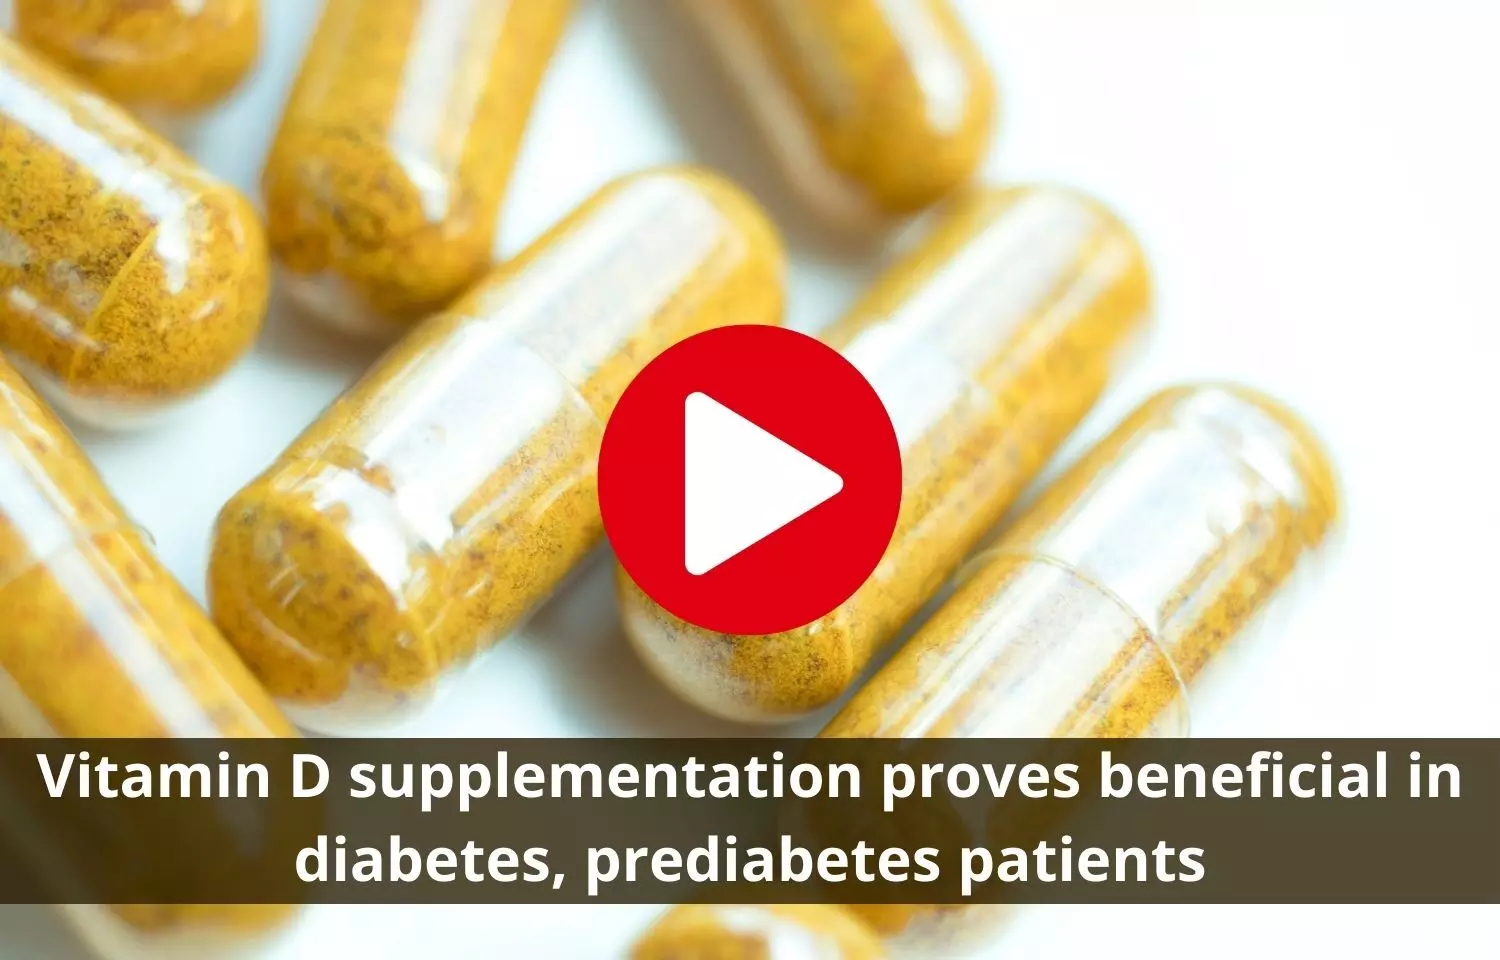 Vitamin D supplementation proves beneficial in diabetes, prediabetes patients